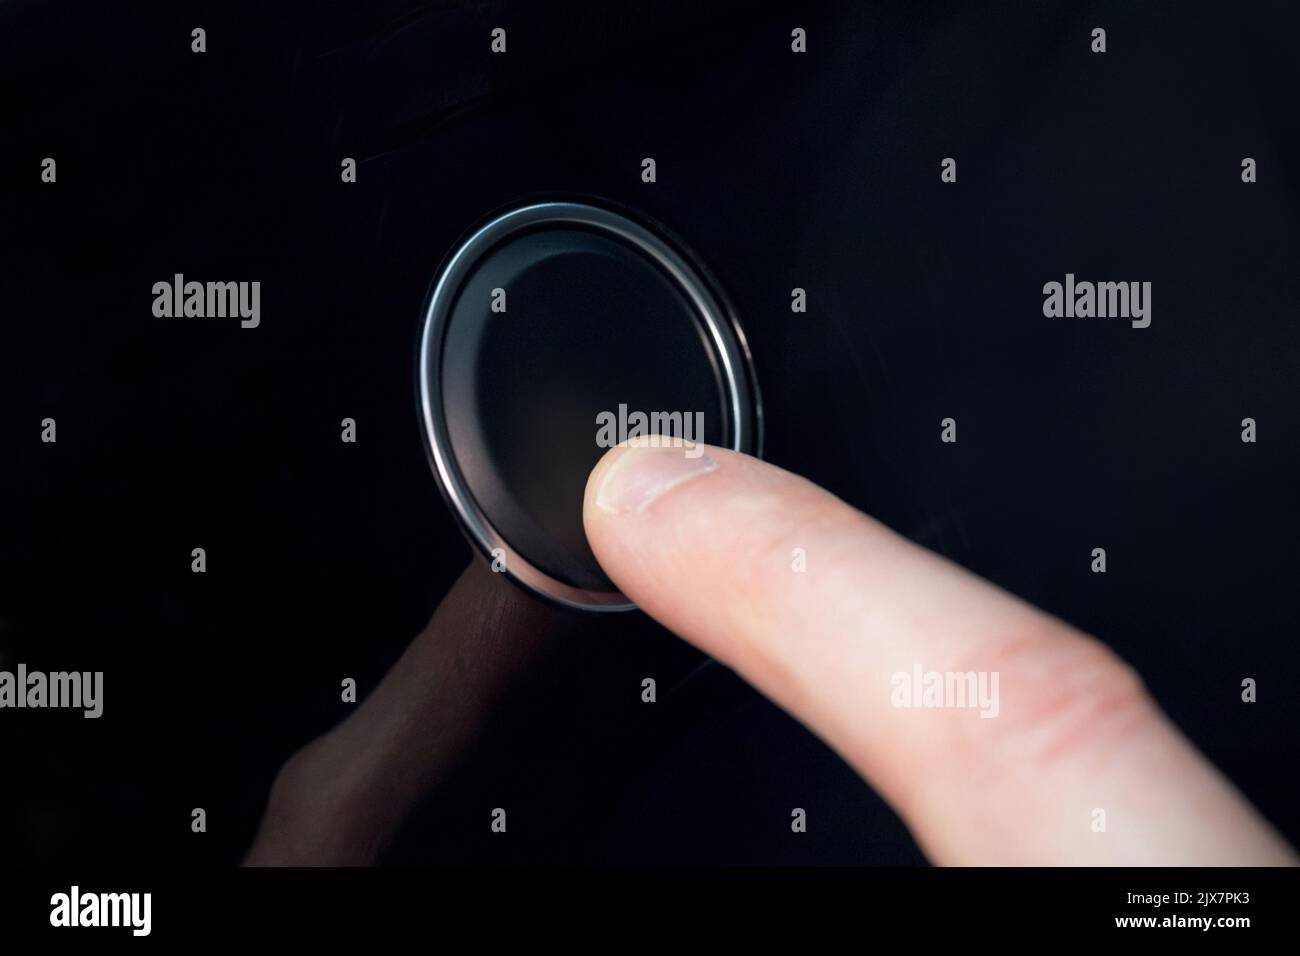 White index finger pressing a small black button Stock Photo